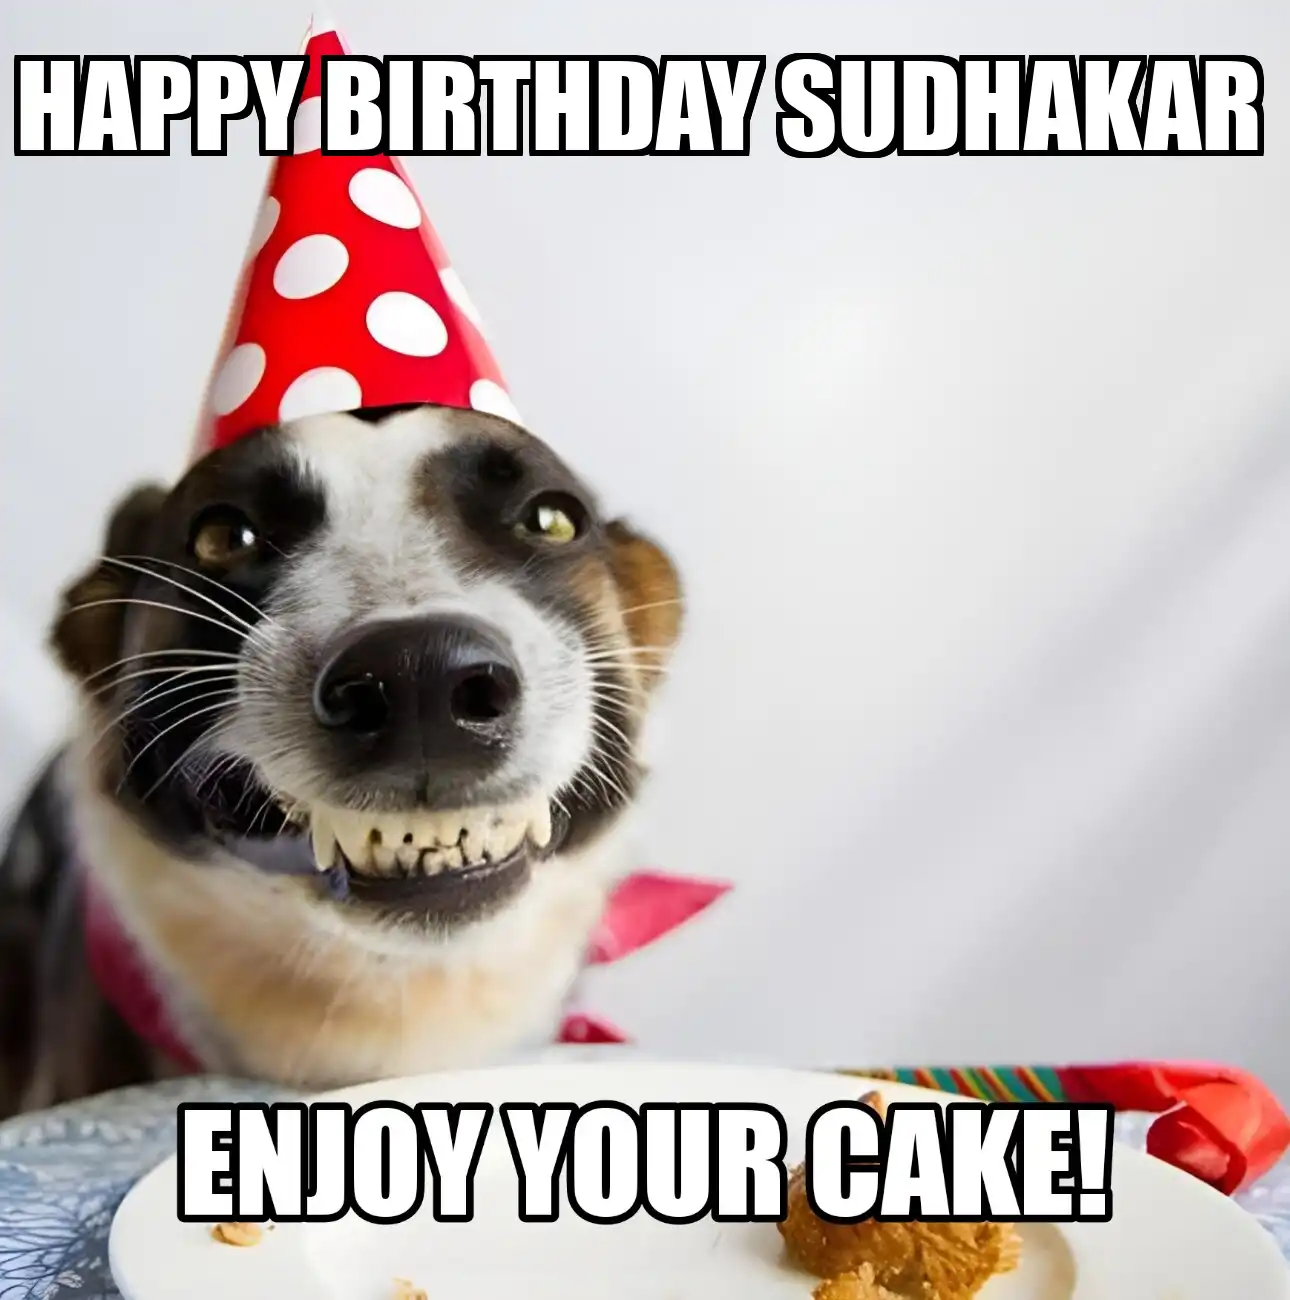 Happy Birthday Sudhakar Enjoy Your Cake Dog Meme